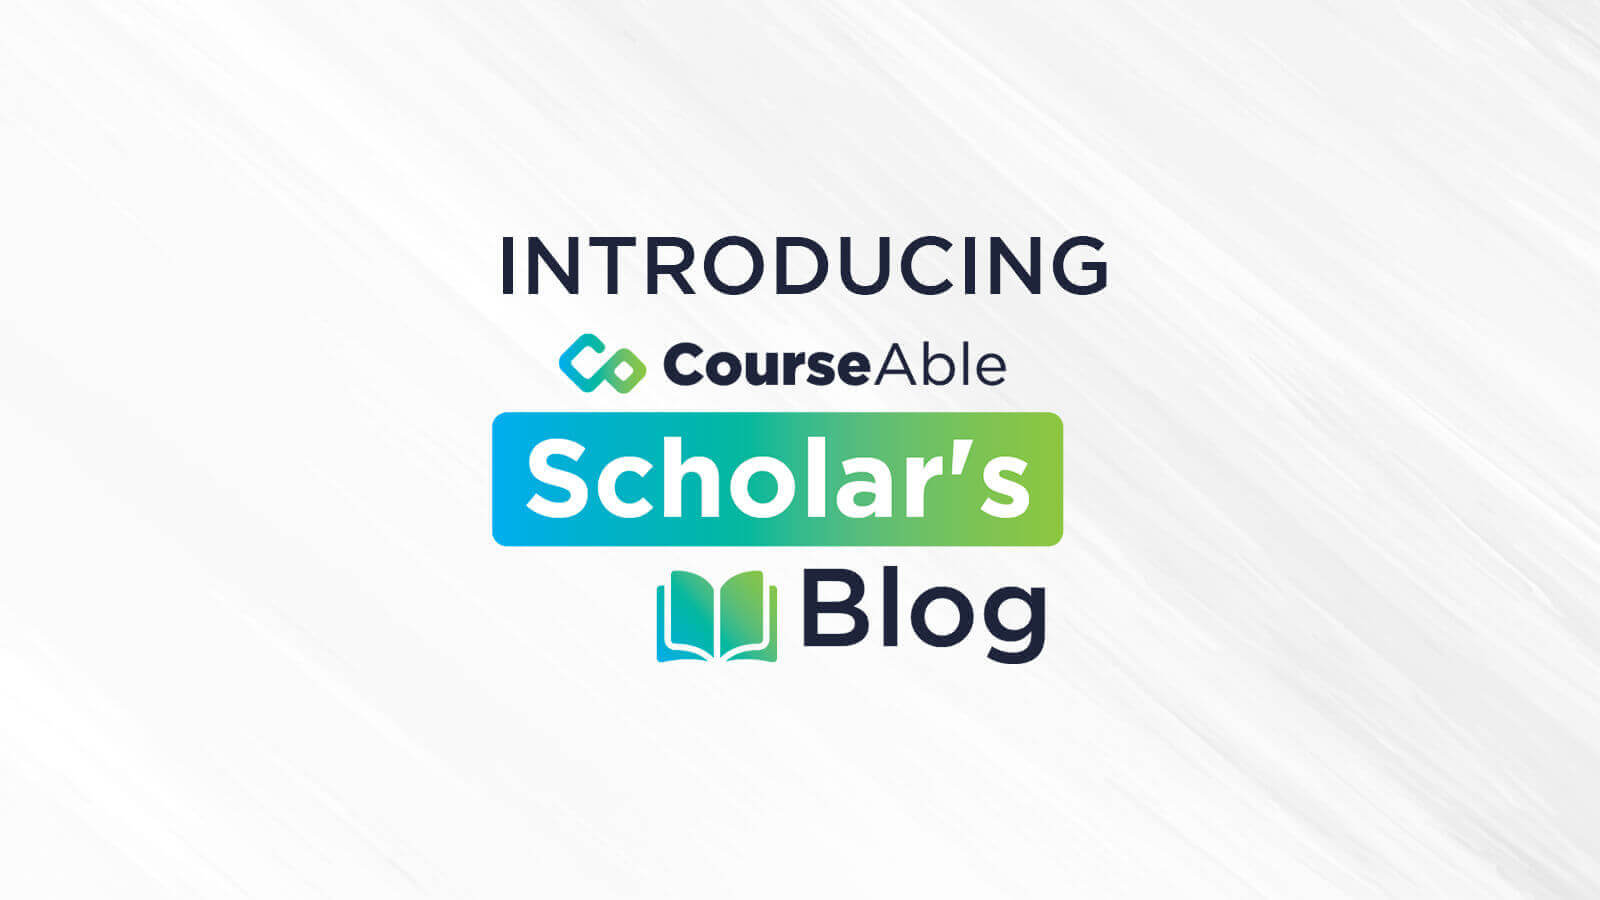 CourseAble Scholar's Blog